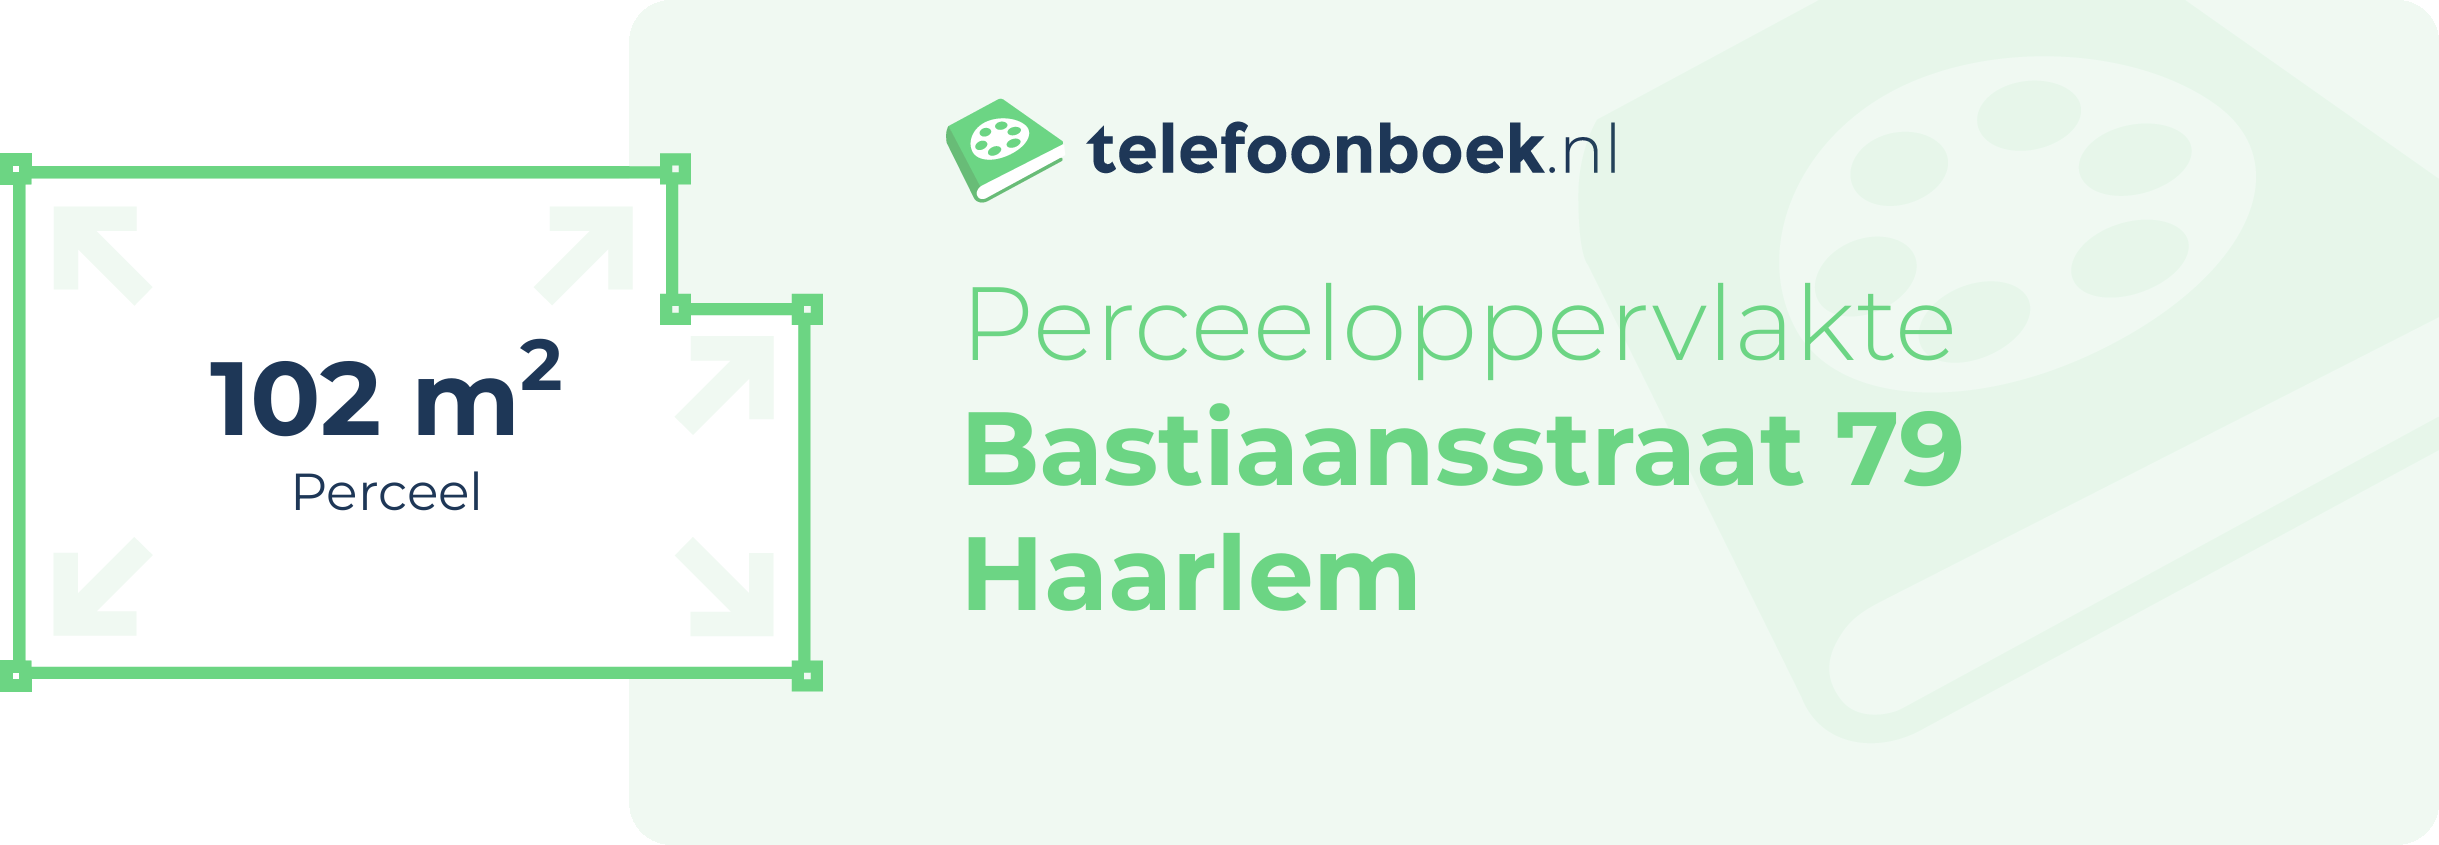 Perceeloppervlakte Bastiaansstraat 79 Haarlem